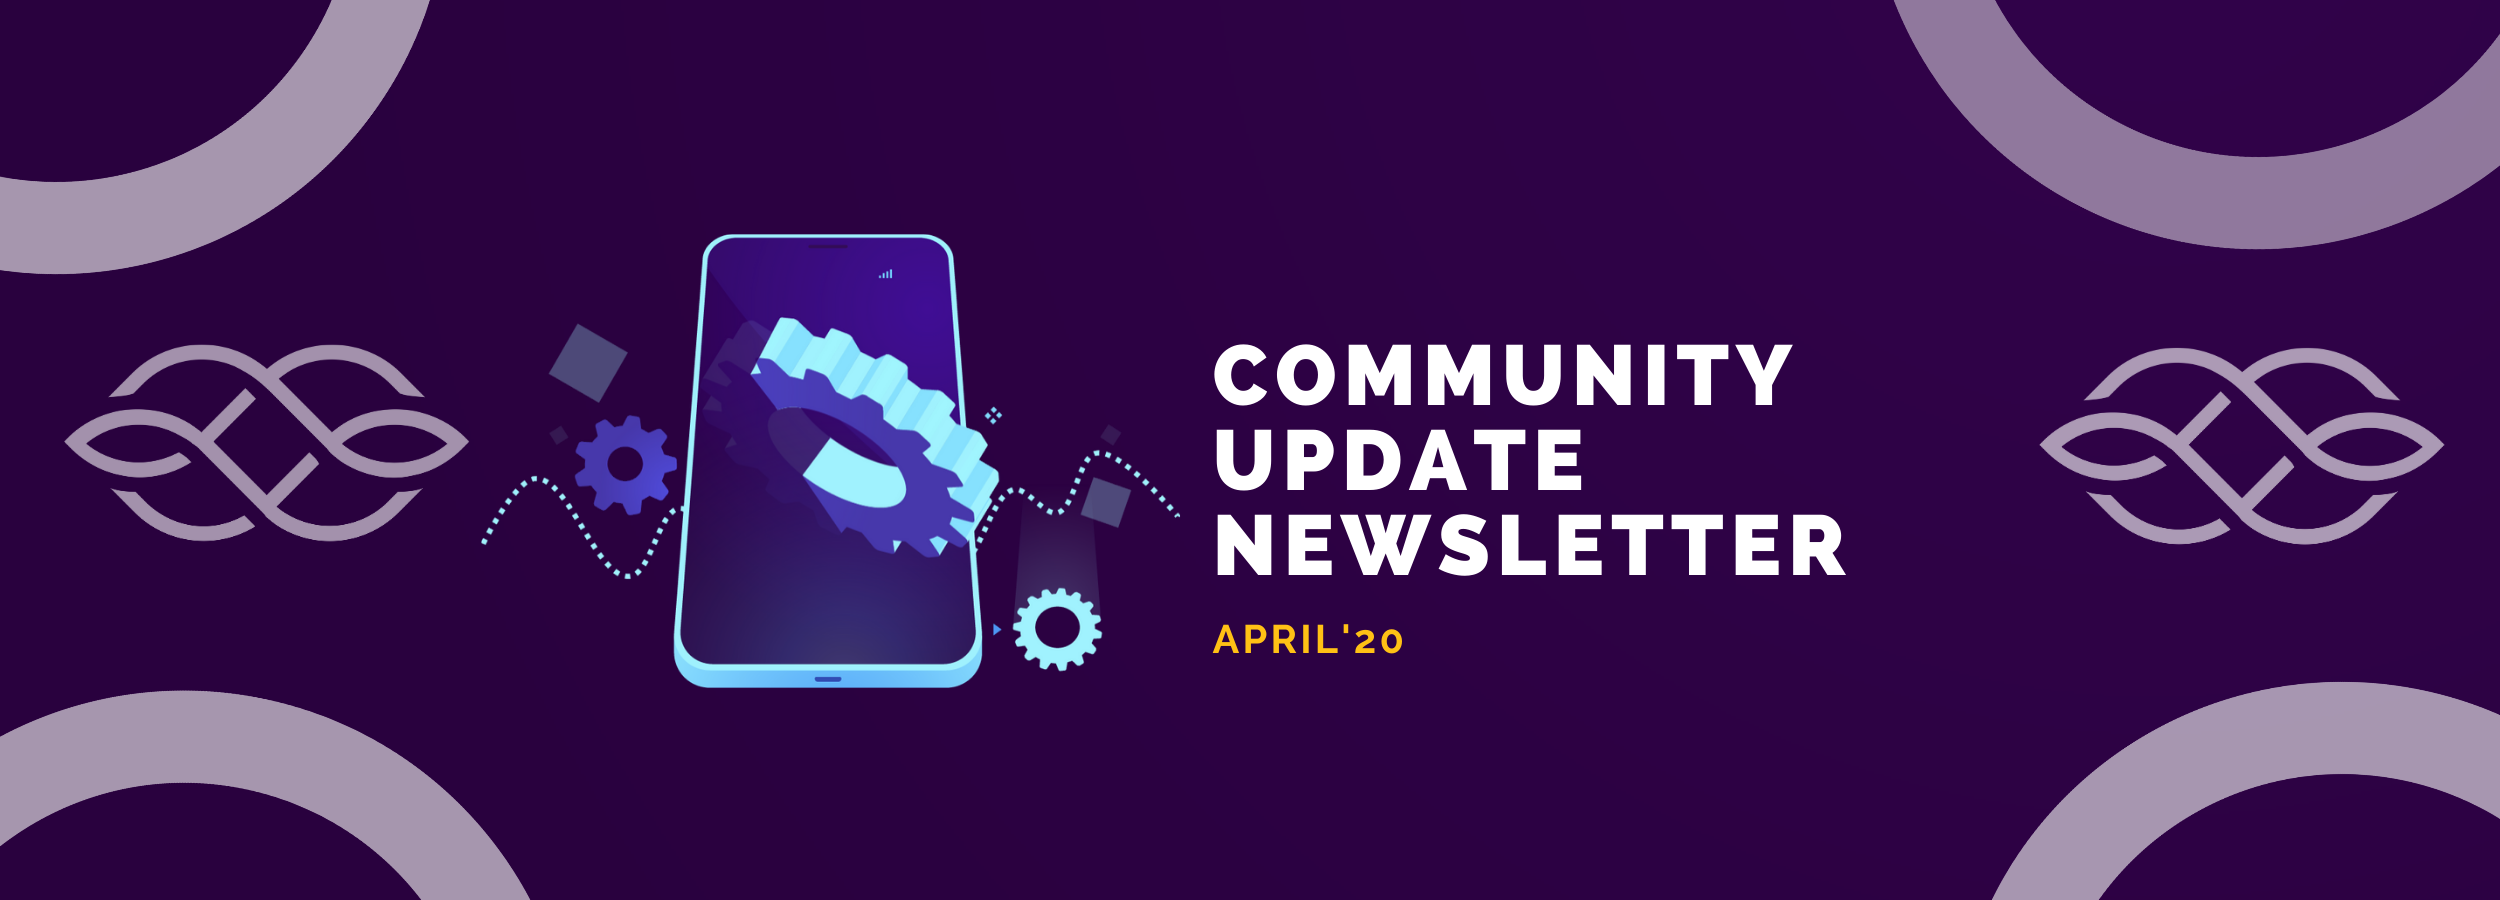 IAGON Community Update Newsletter April’20